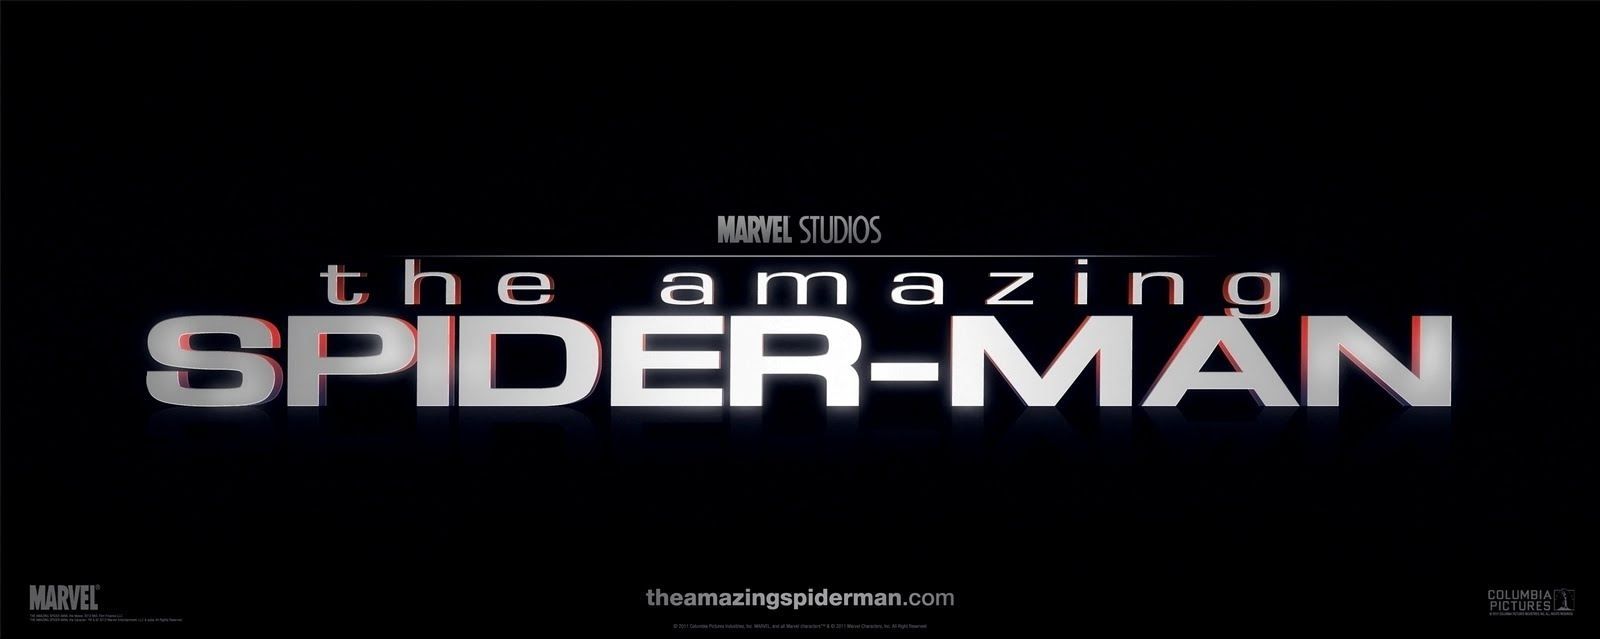 The Amazing Spider-Man Banner